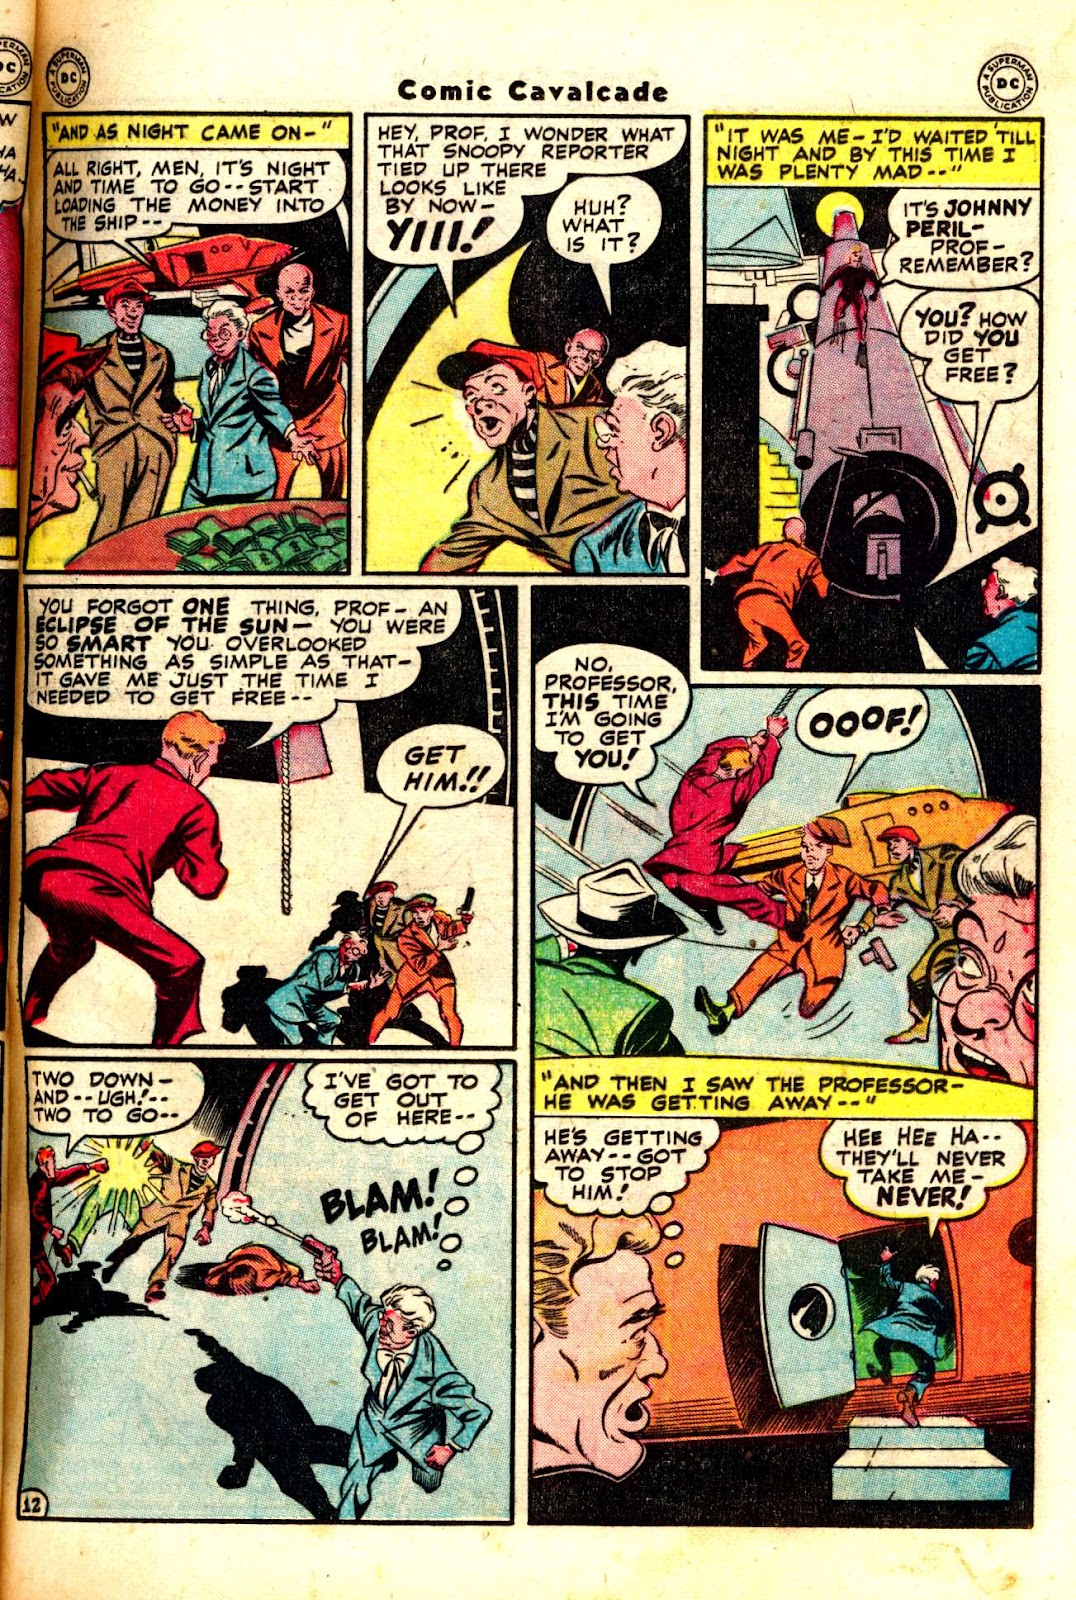 Comic Cavalcade issue 24 - Page 29